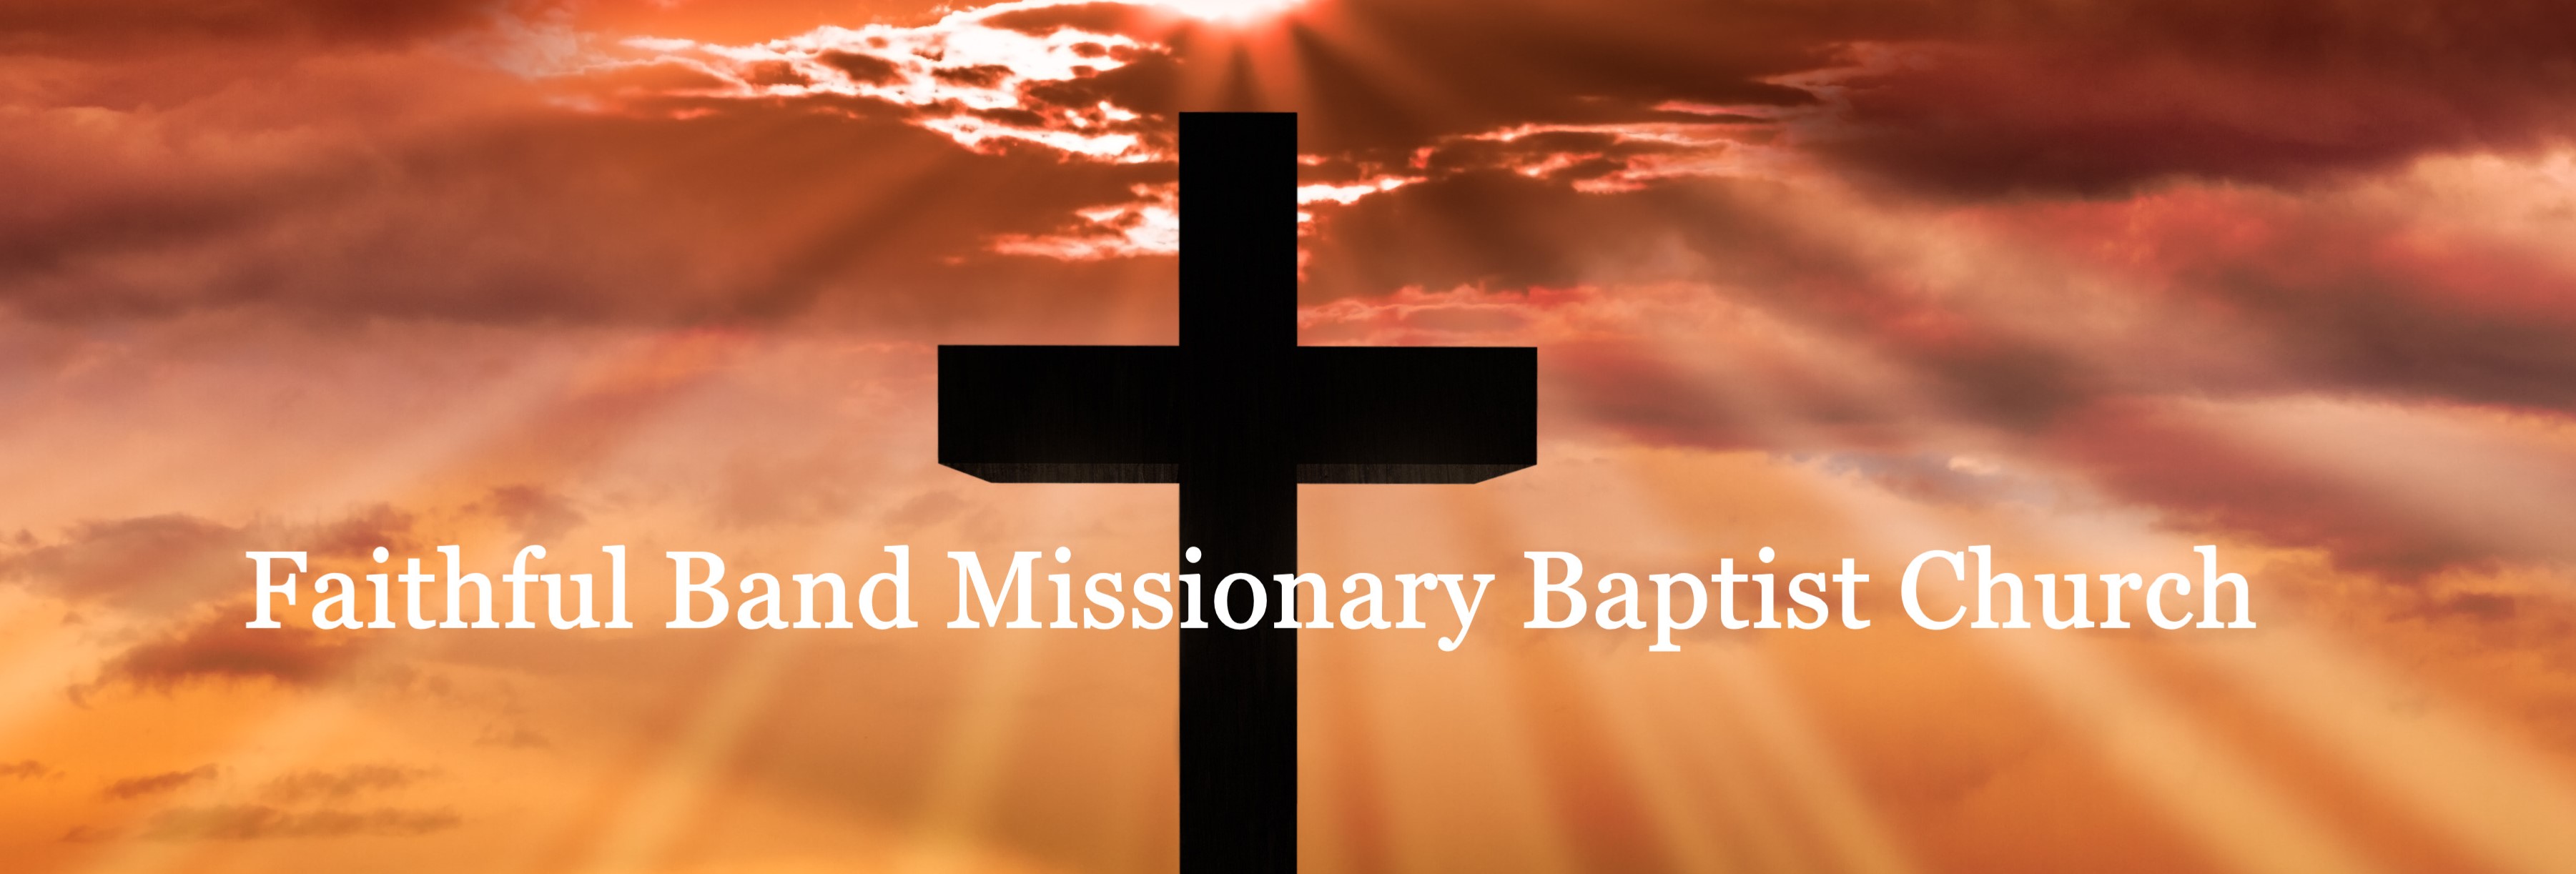 Faithful Band Missionary Baptist Church logo